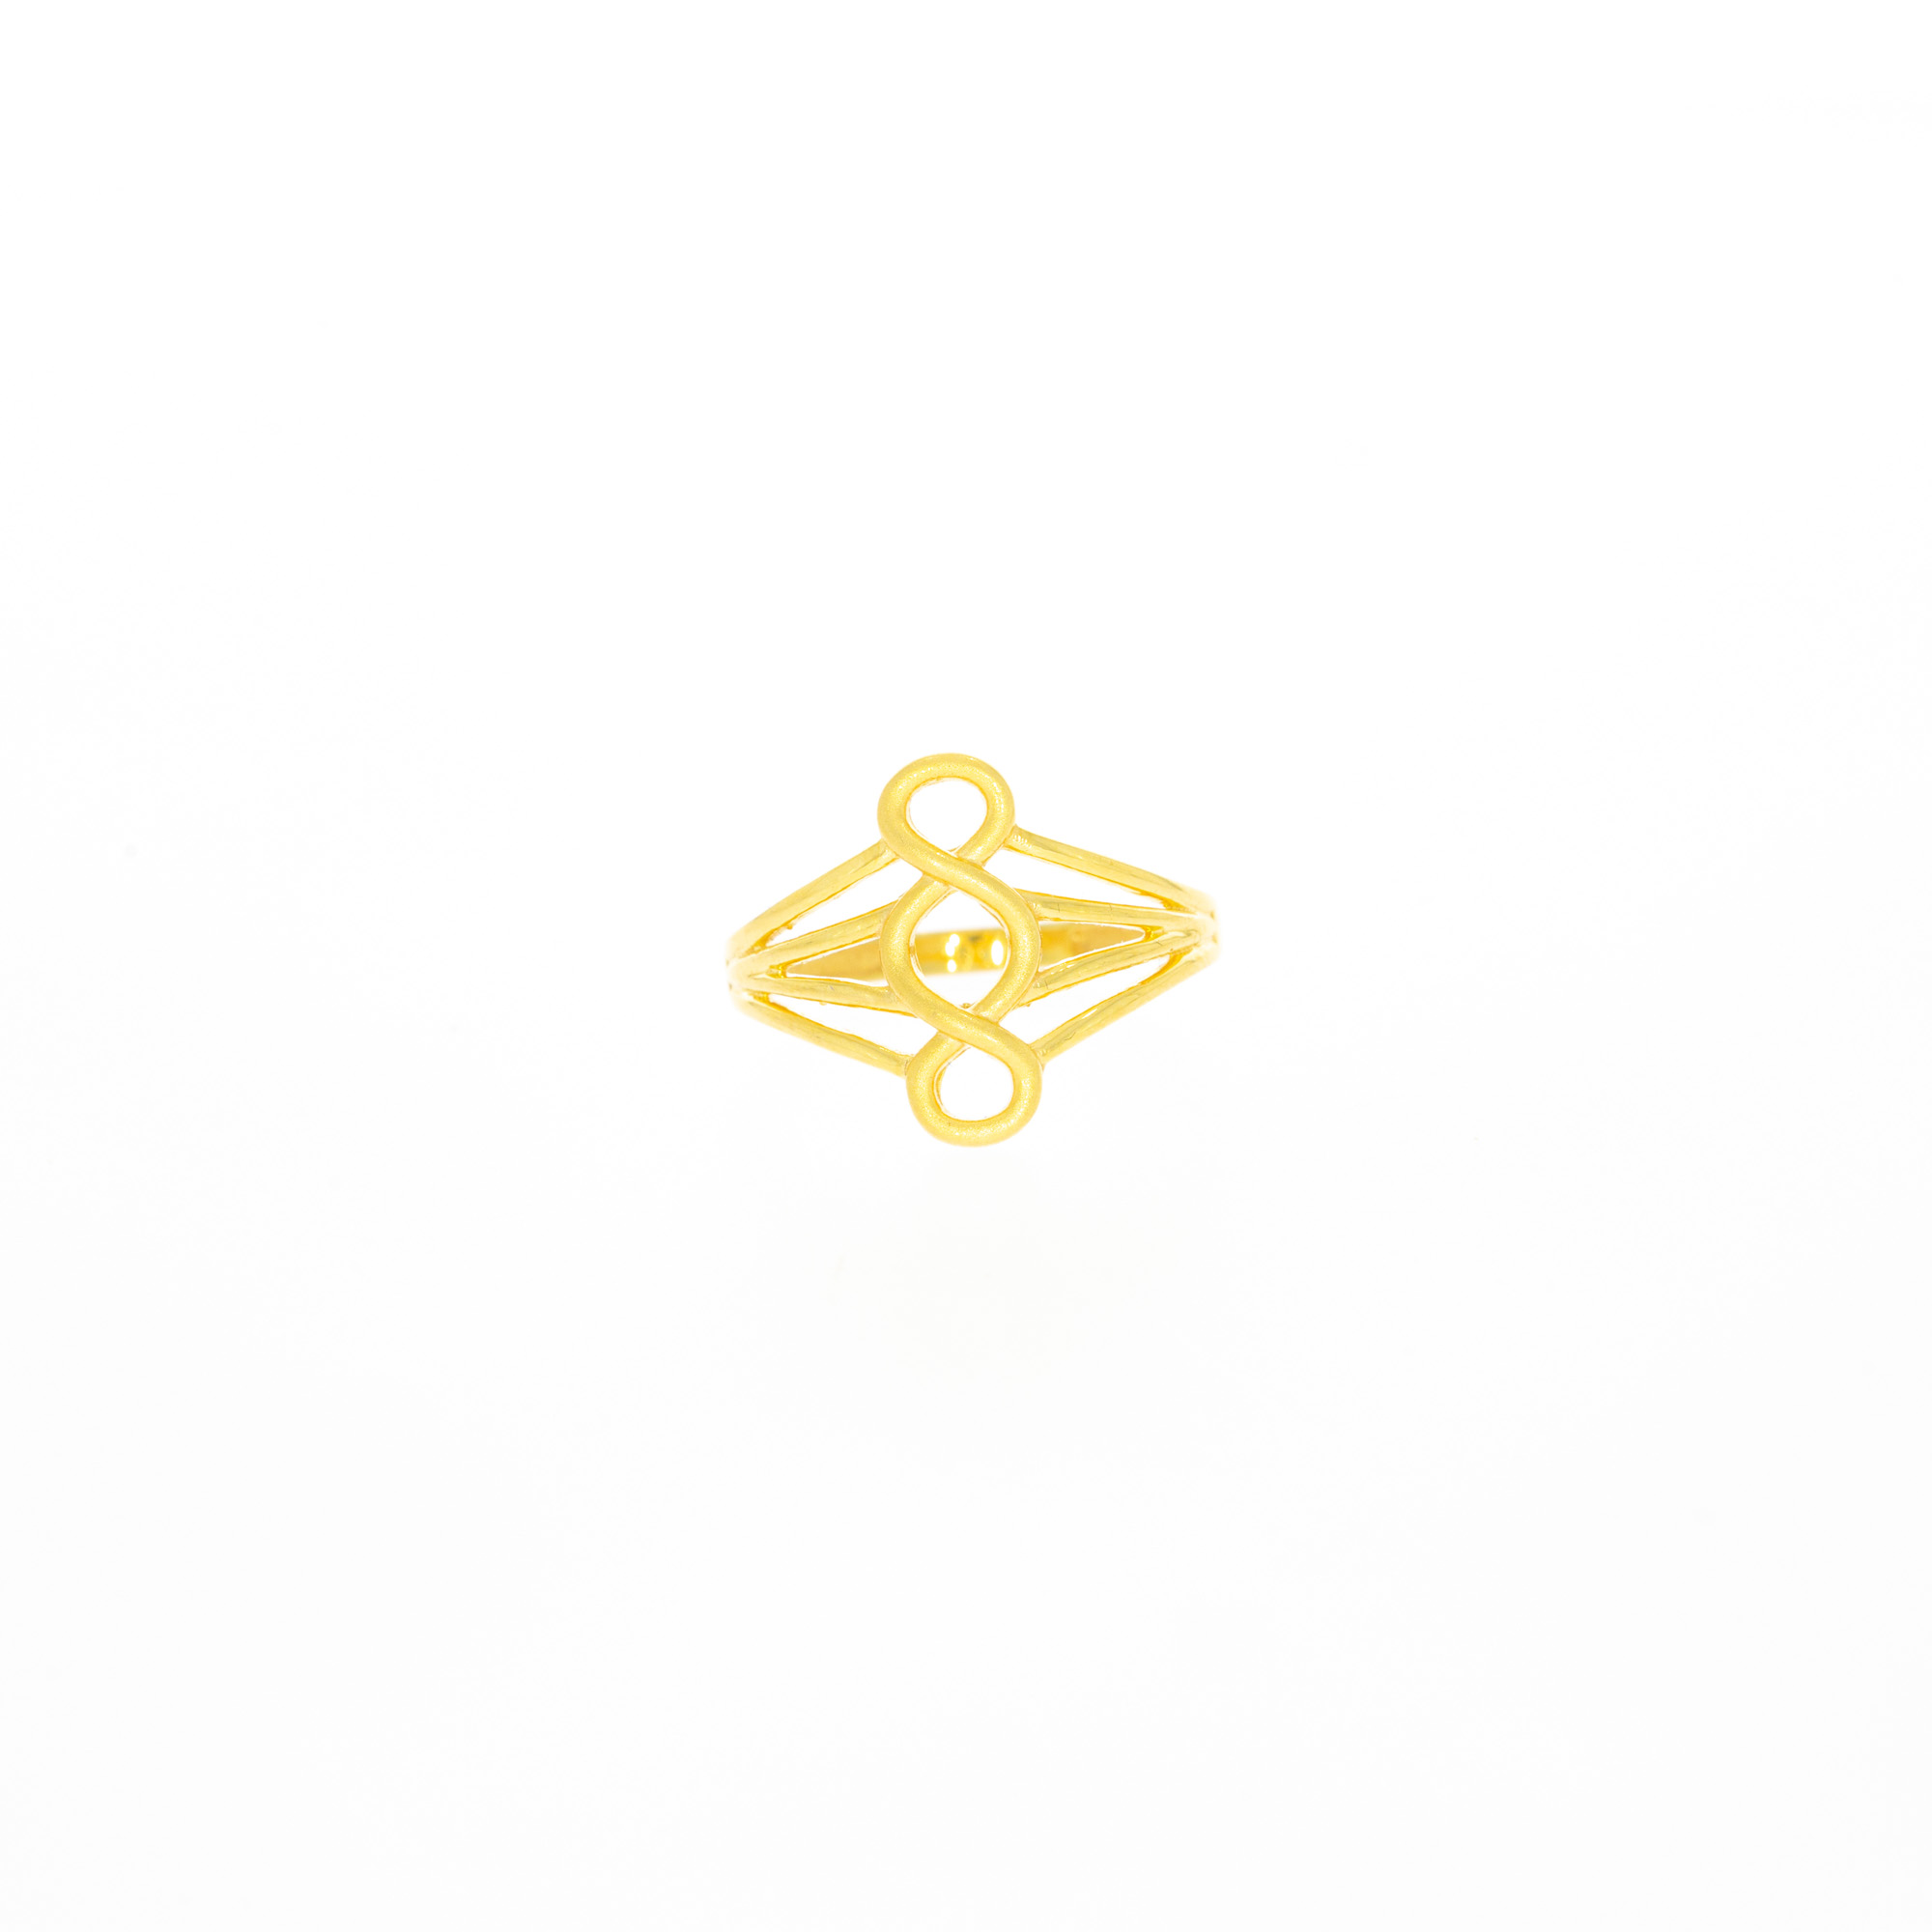 Yellow Gold Infinity Symbol Ring RG-10113